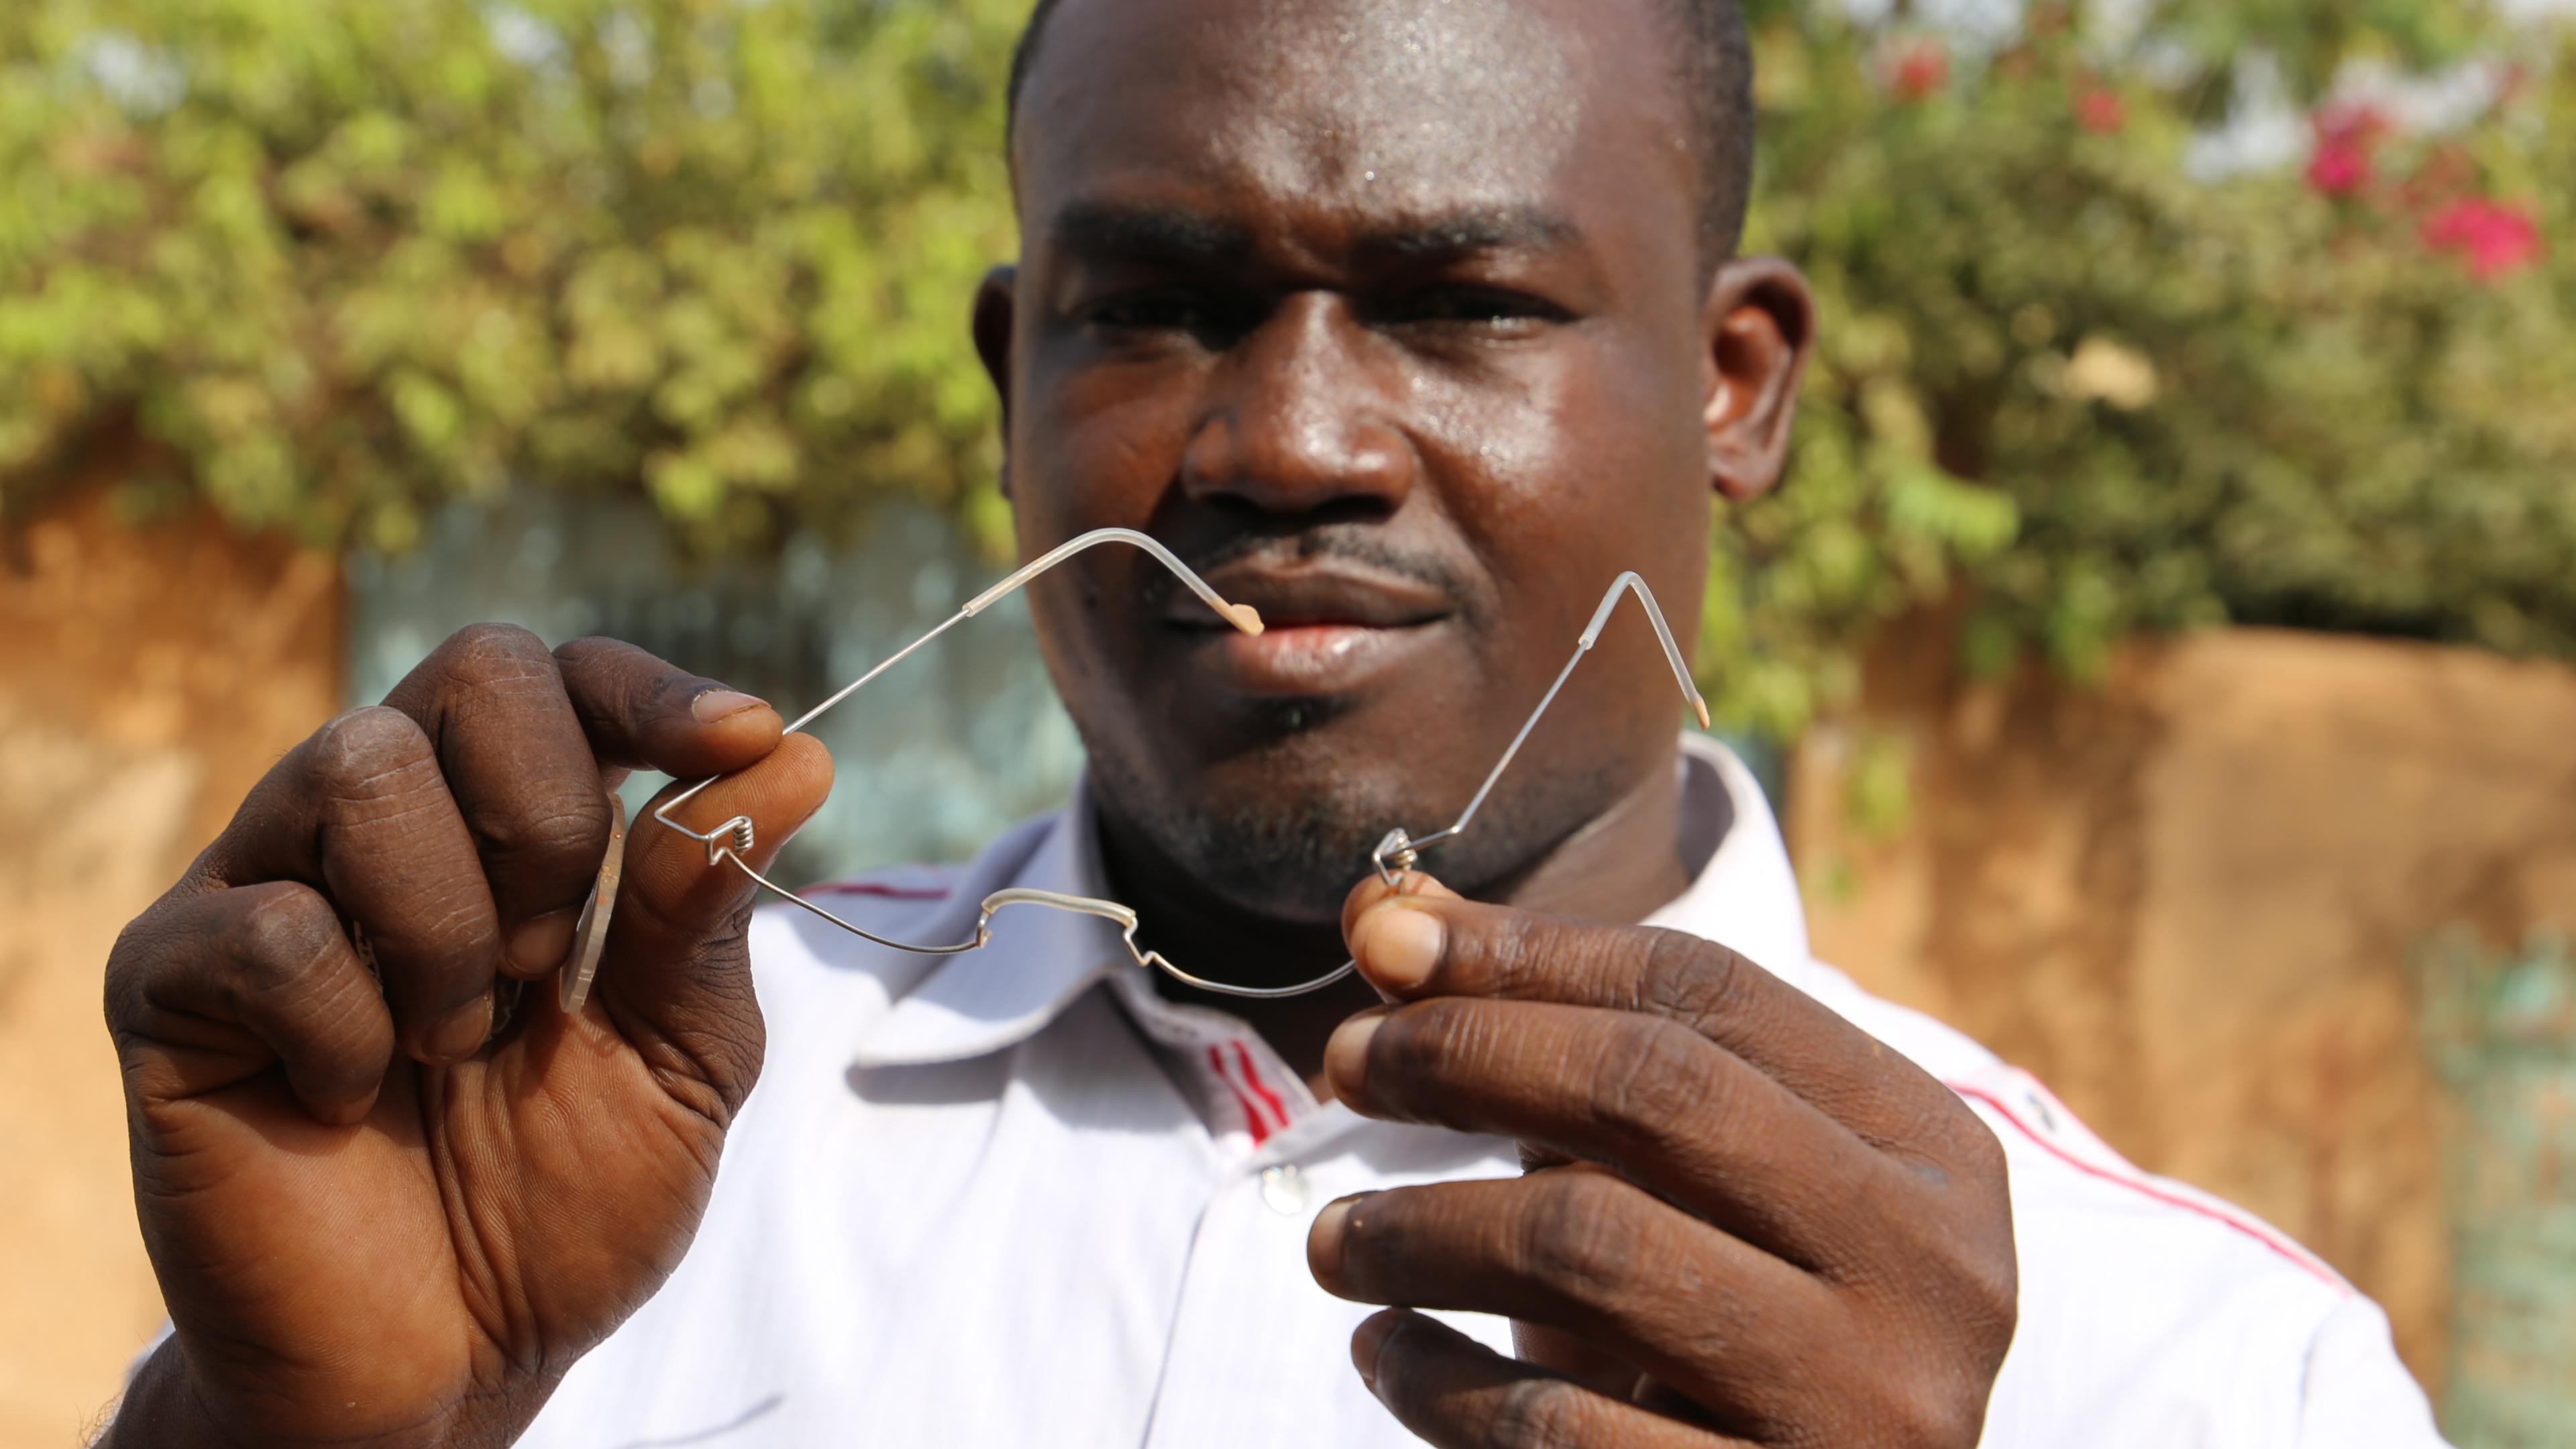 GoodVision Burkina Faso employee holds bent OneDollarGlasses